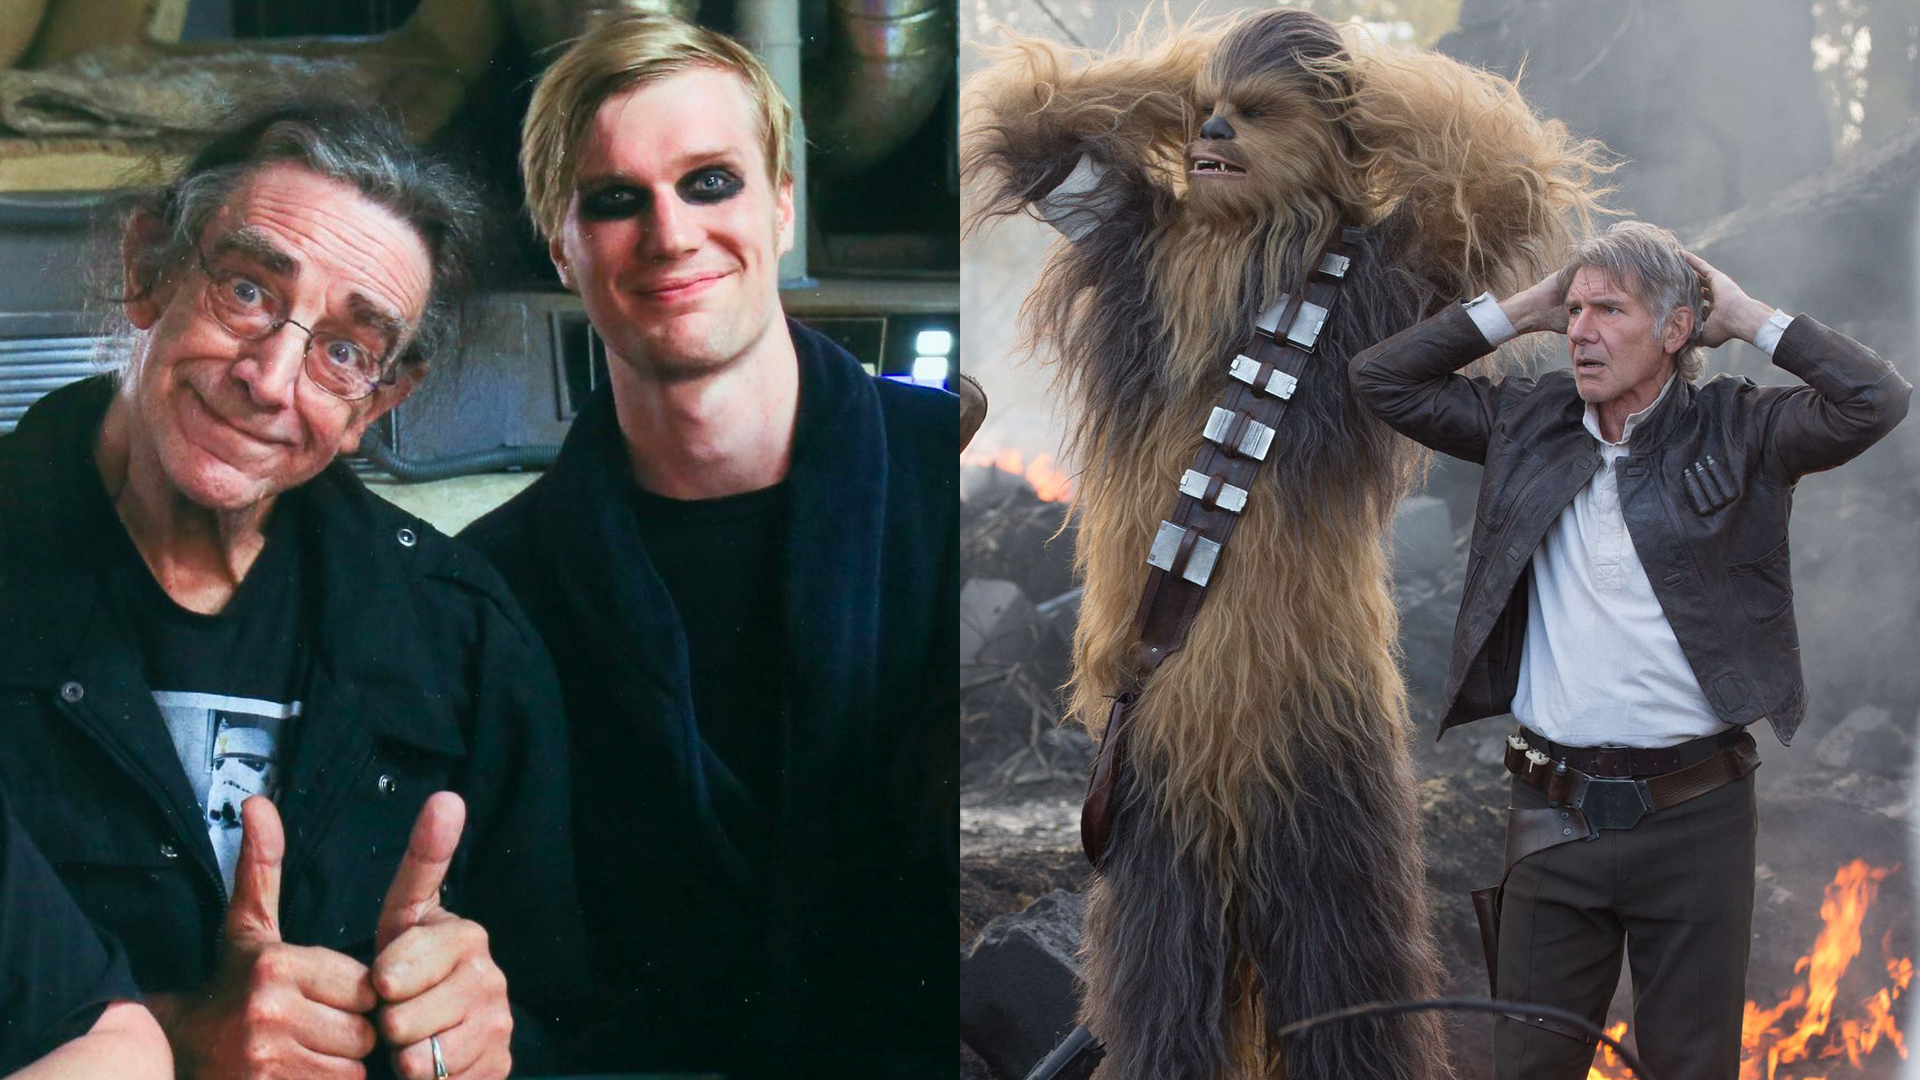 Fallece Peter Mayhew, muerto el actor de Chewbacca en Star Wars